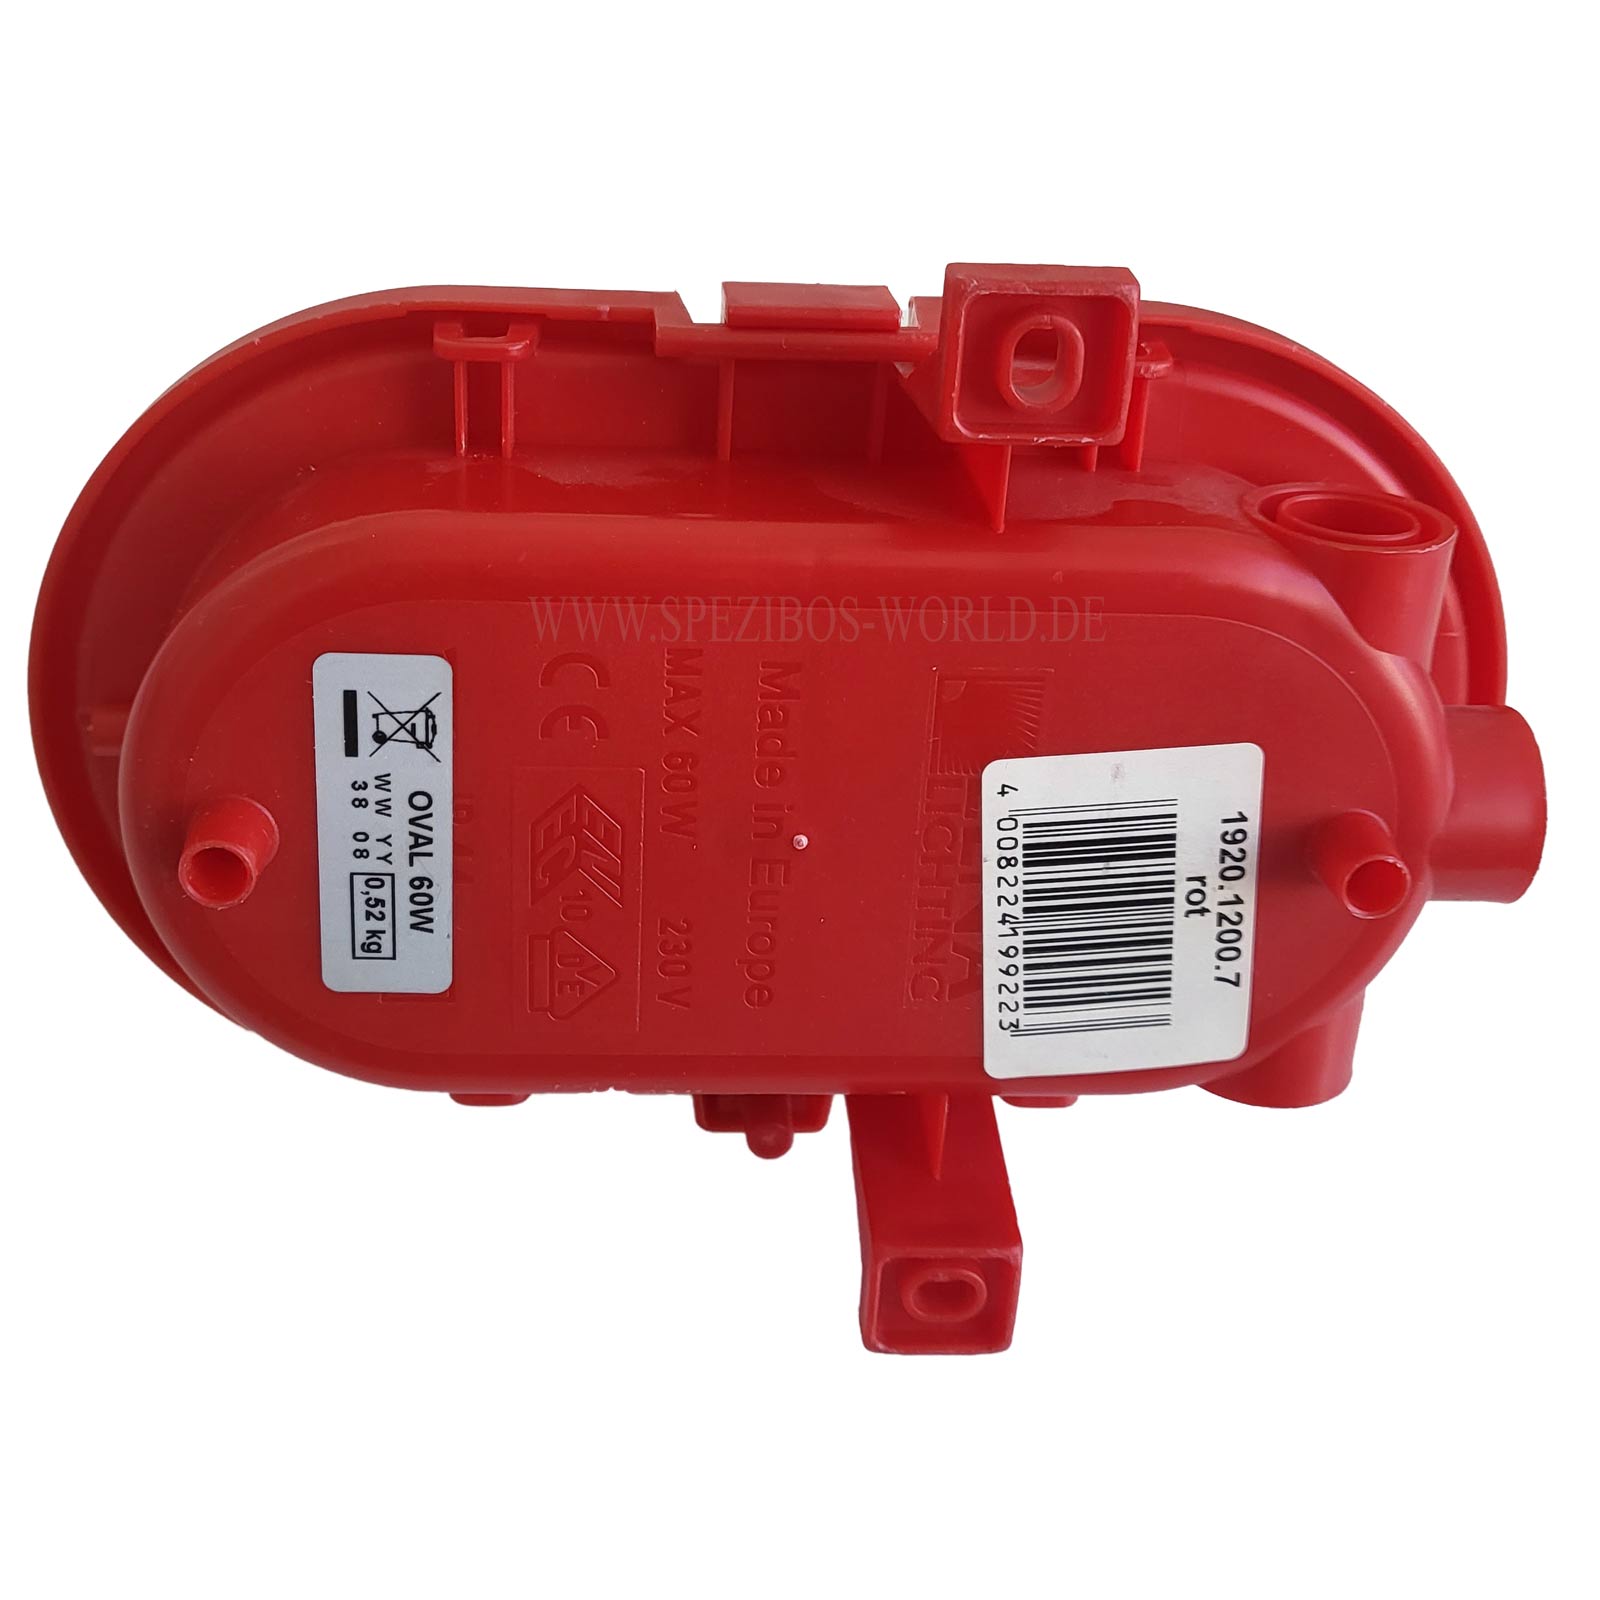 , Kopp Fassung E27 Kellerlampe rot Ovalarmatur Spezibos-world